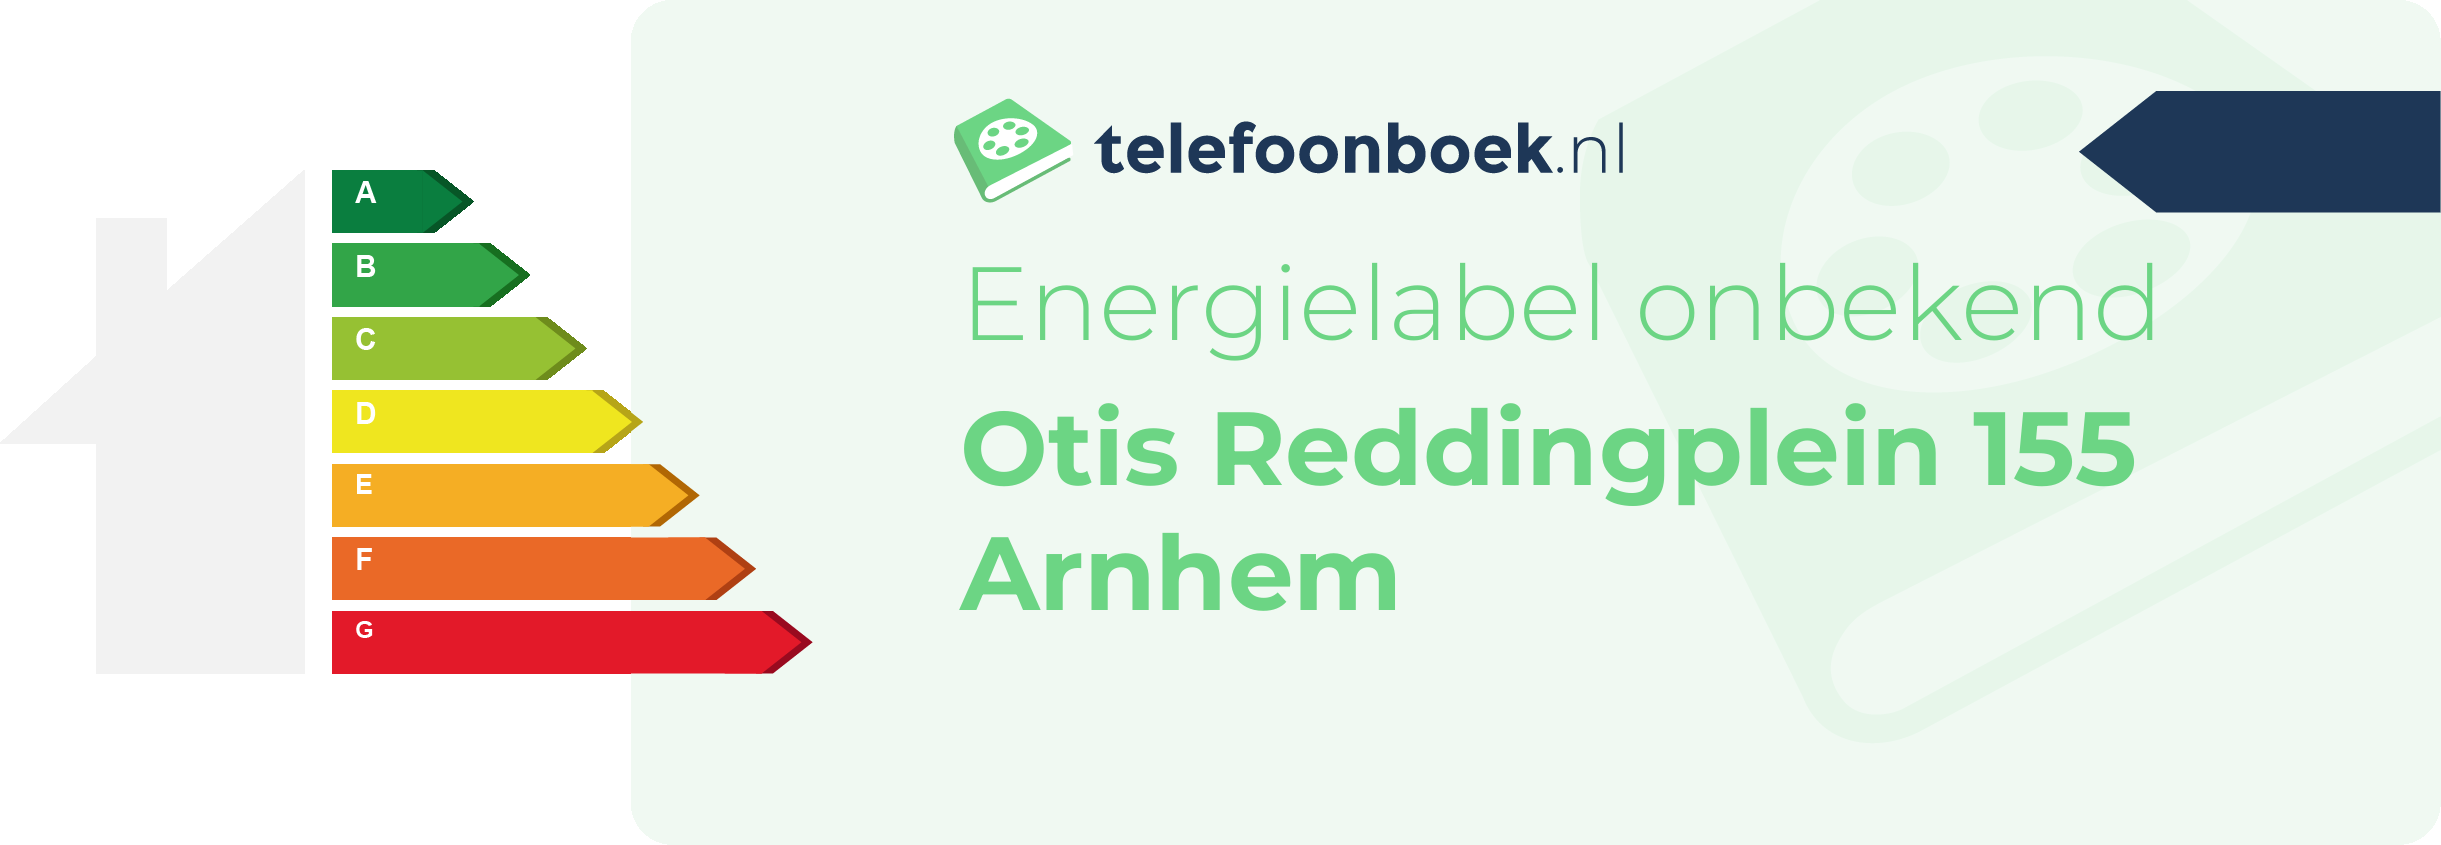 Energielabel Otis Reddingplein 155 Arnhem